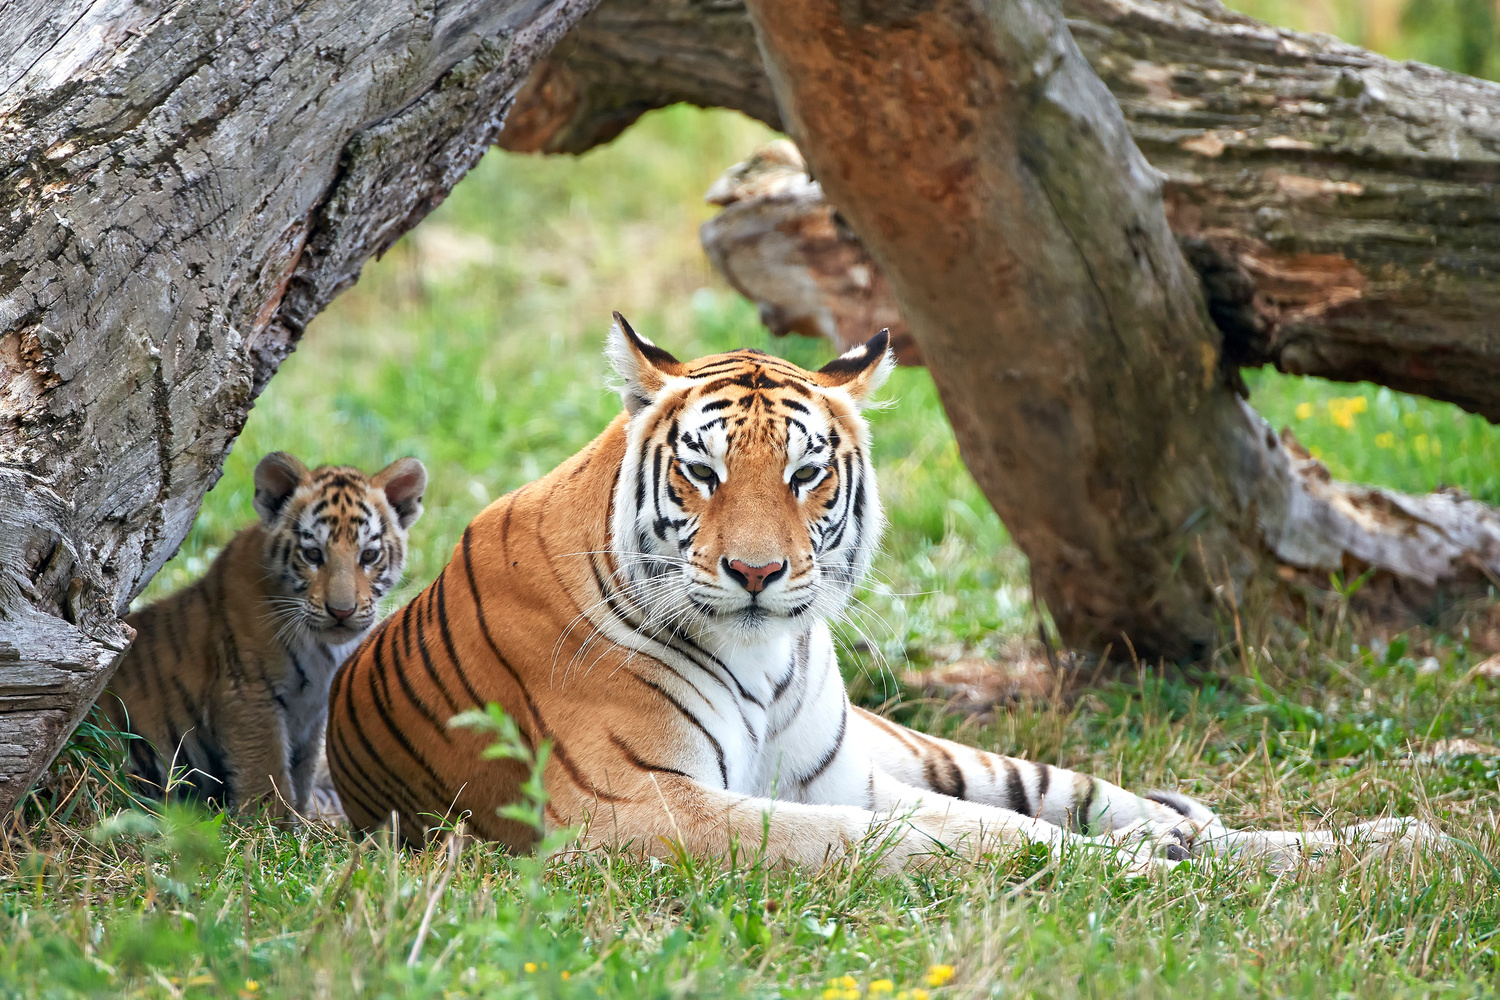 Tigers Near Extinction